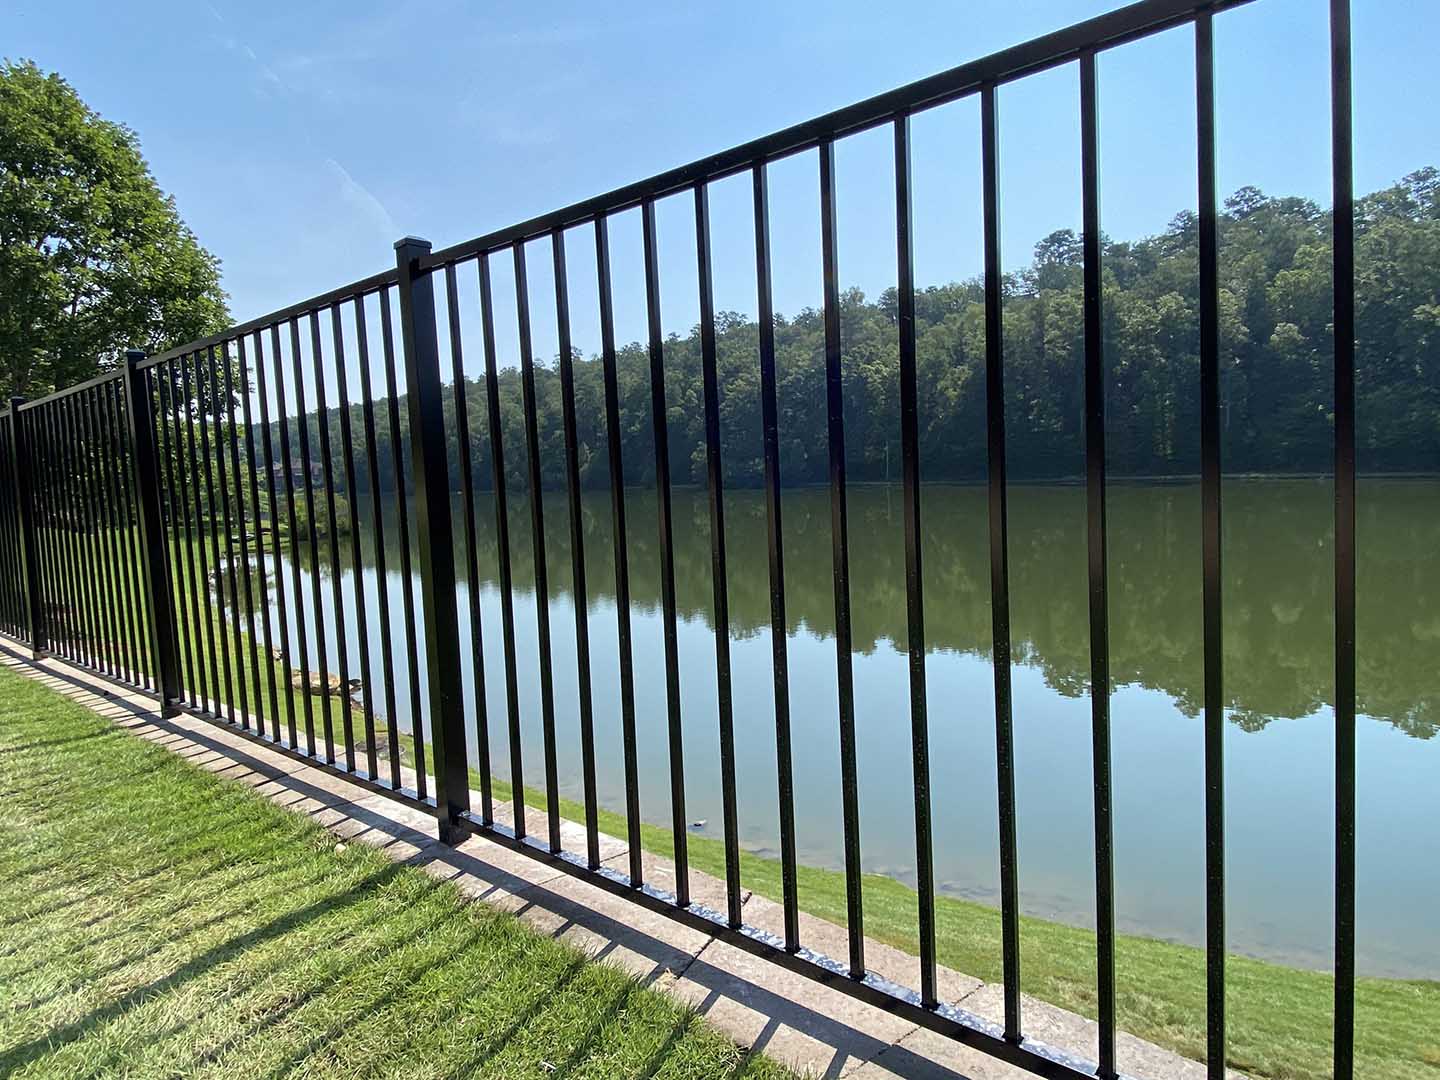 Perimeter fence company Birmingham Alabama 